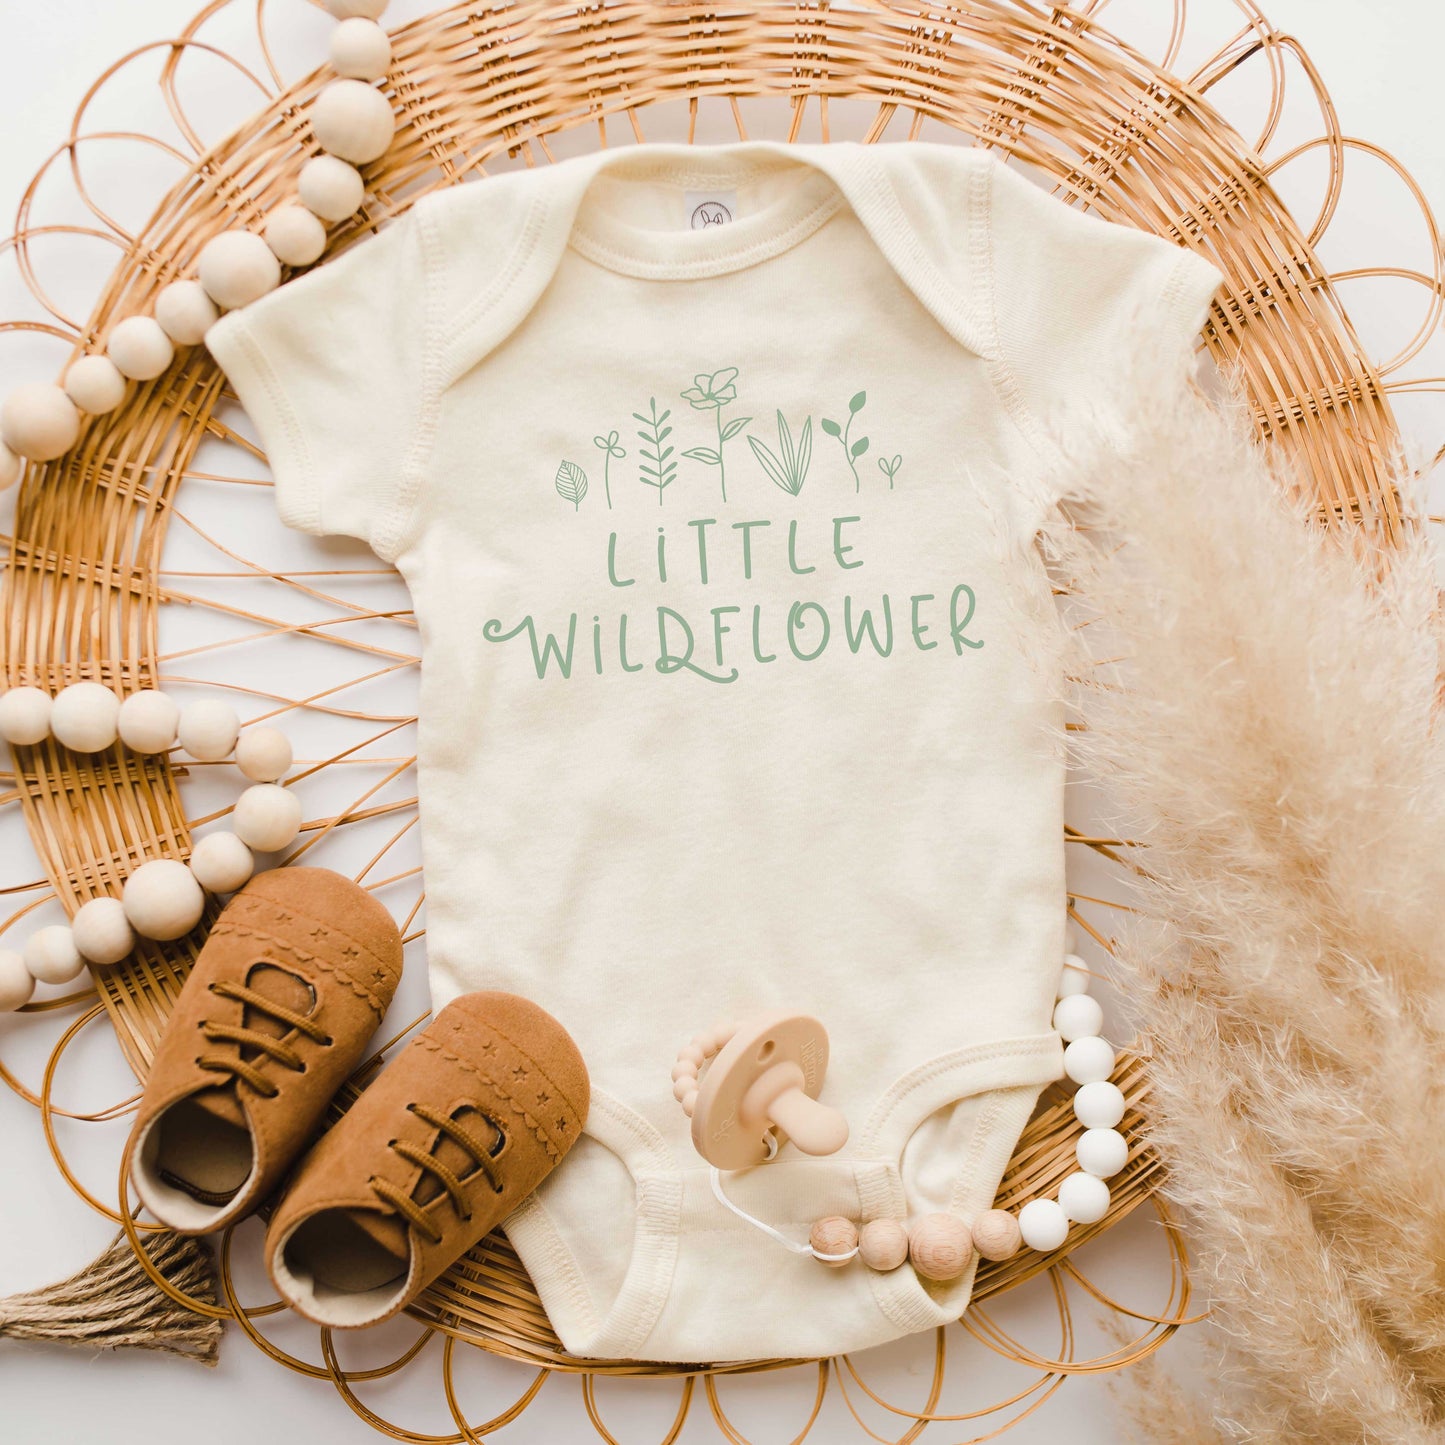 Little Wildflower Flowers | Baby Graphic Short Sleeve Onesie